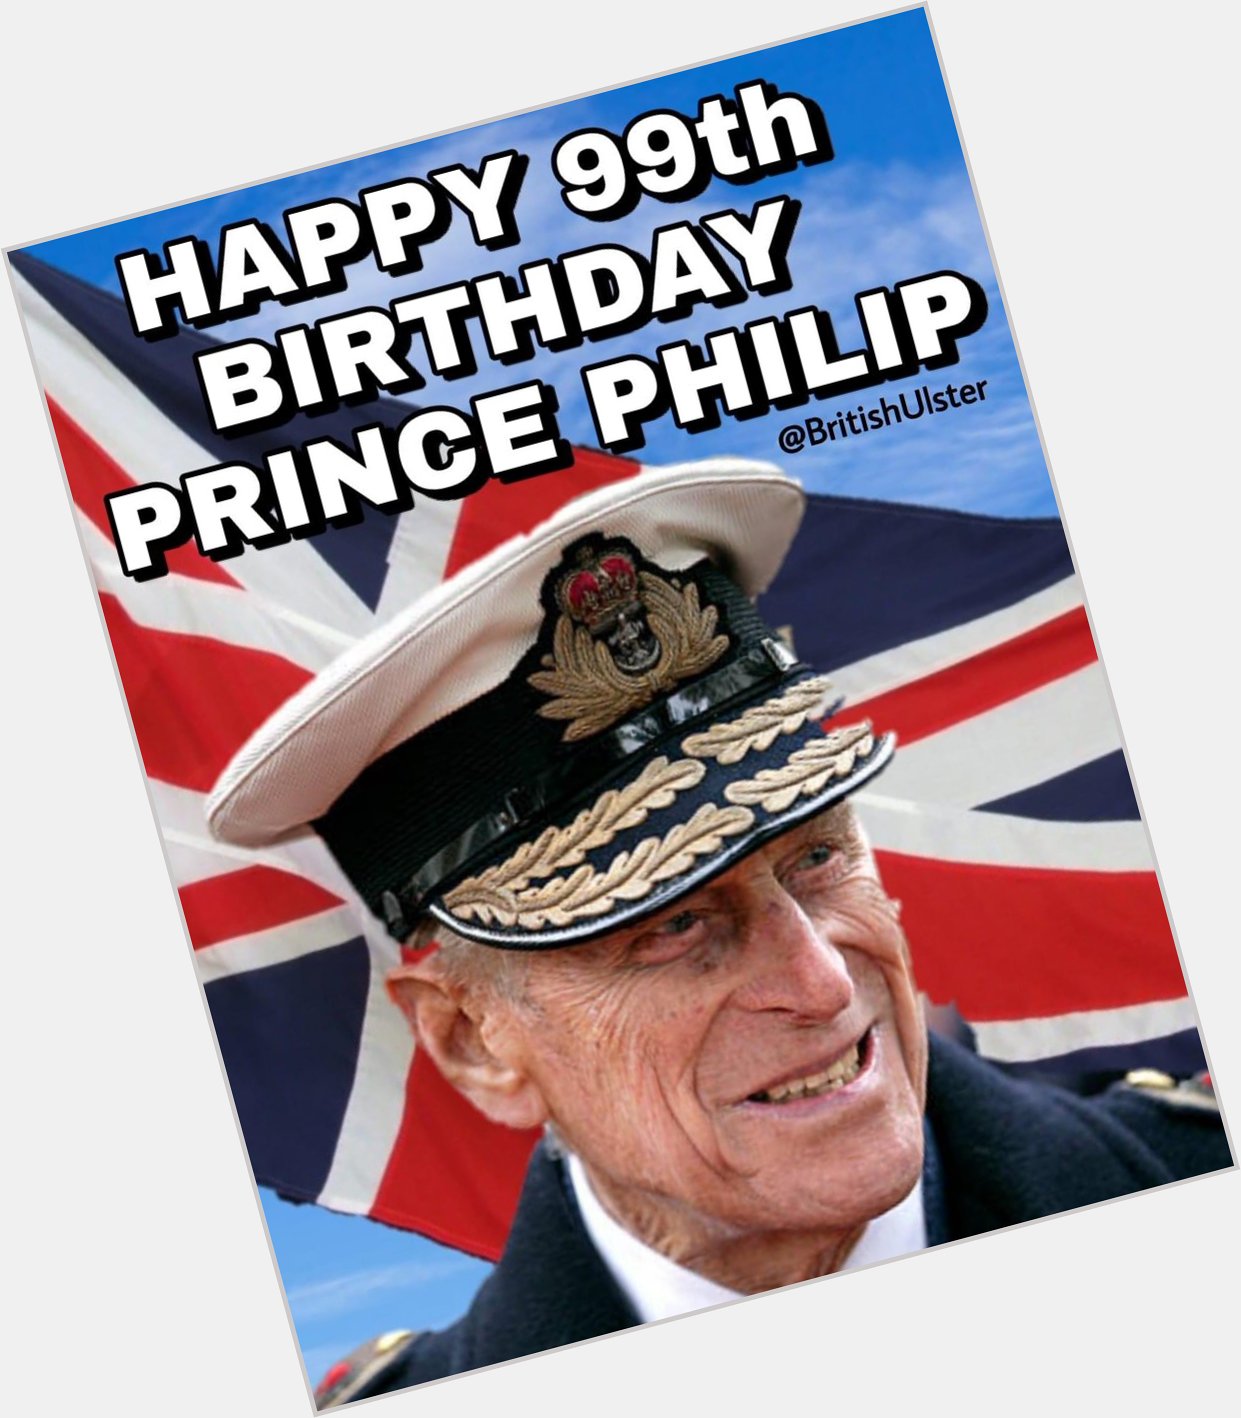 Happy 99th birthday prince Philip    